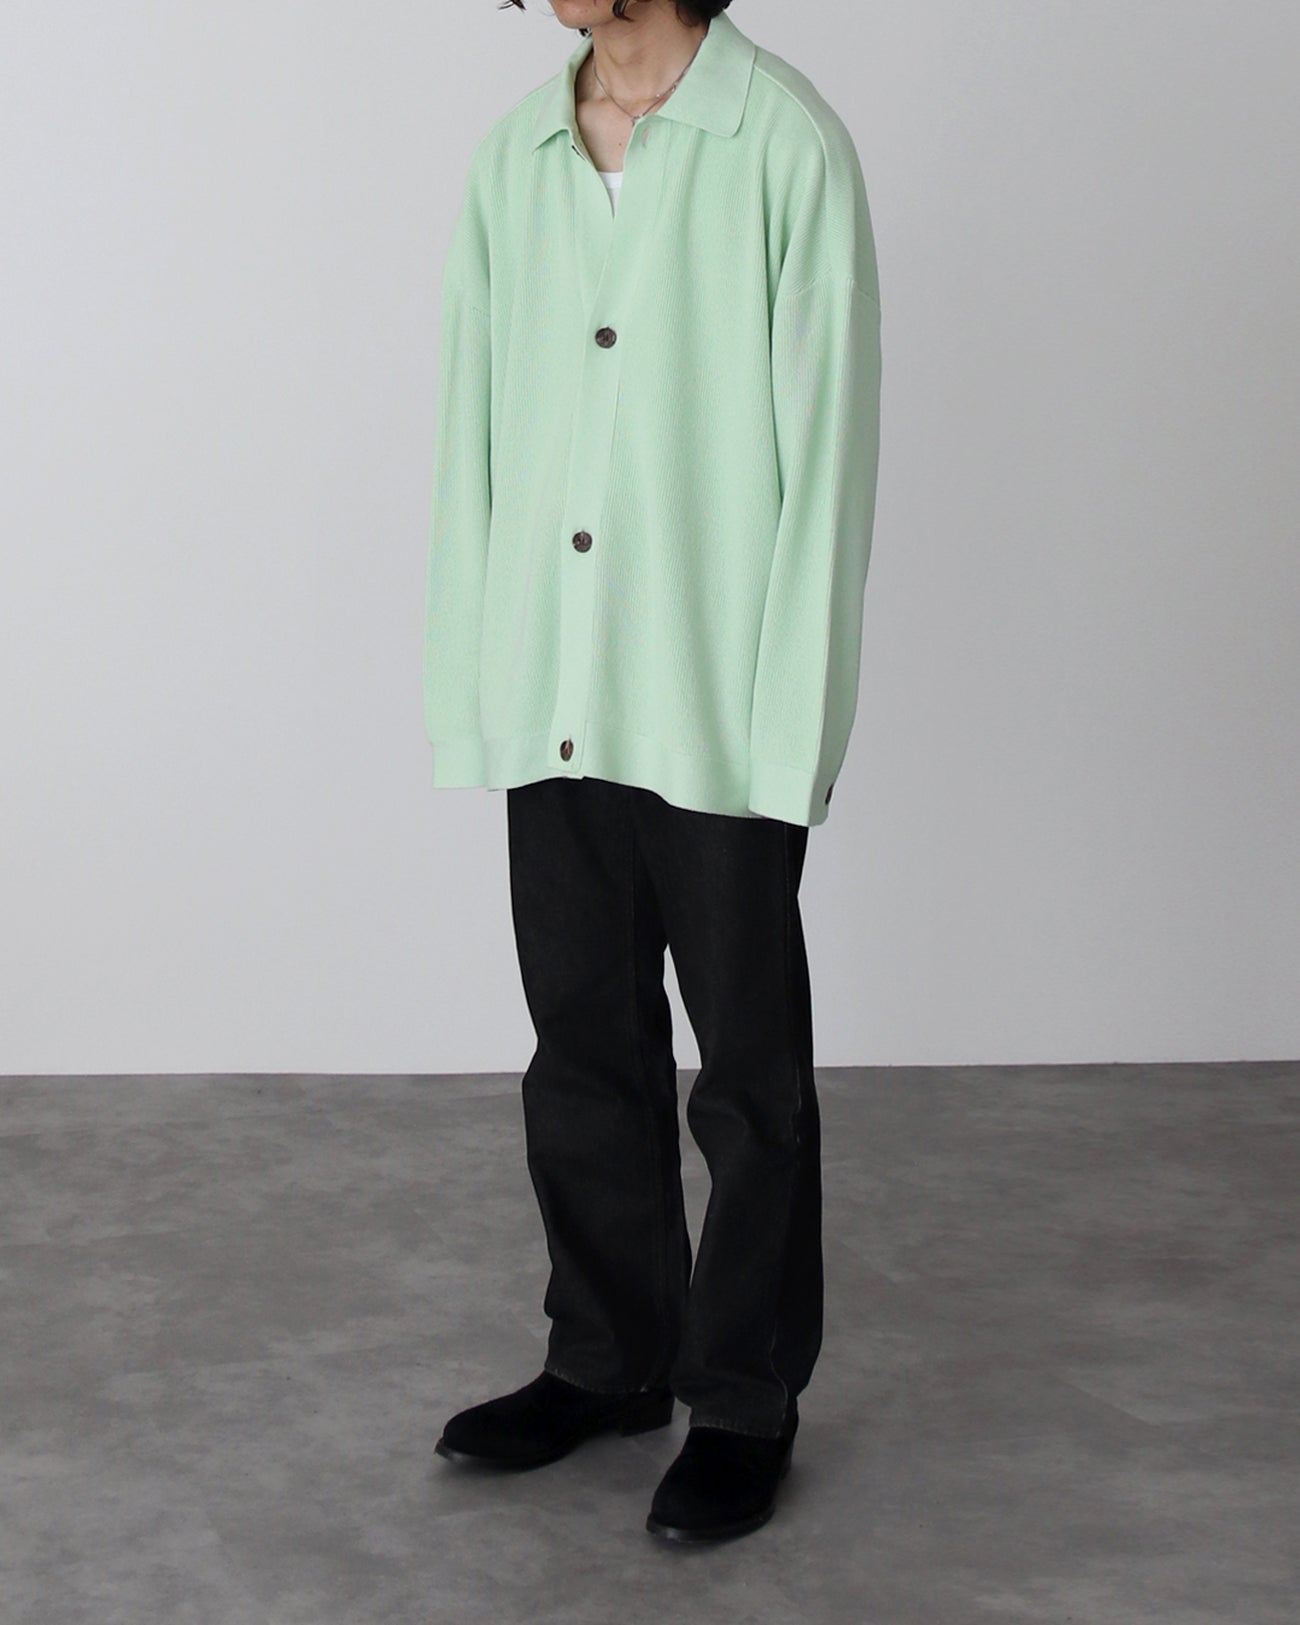 Oversize Knit Shirt Cardigan - mint × orange - FAB4 ONLINE STORE